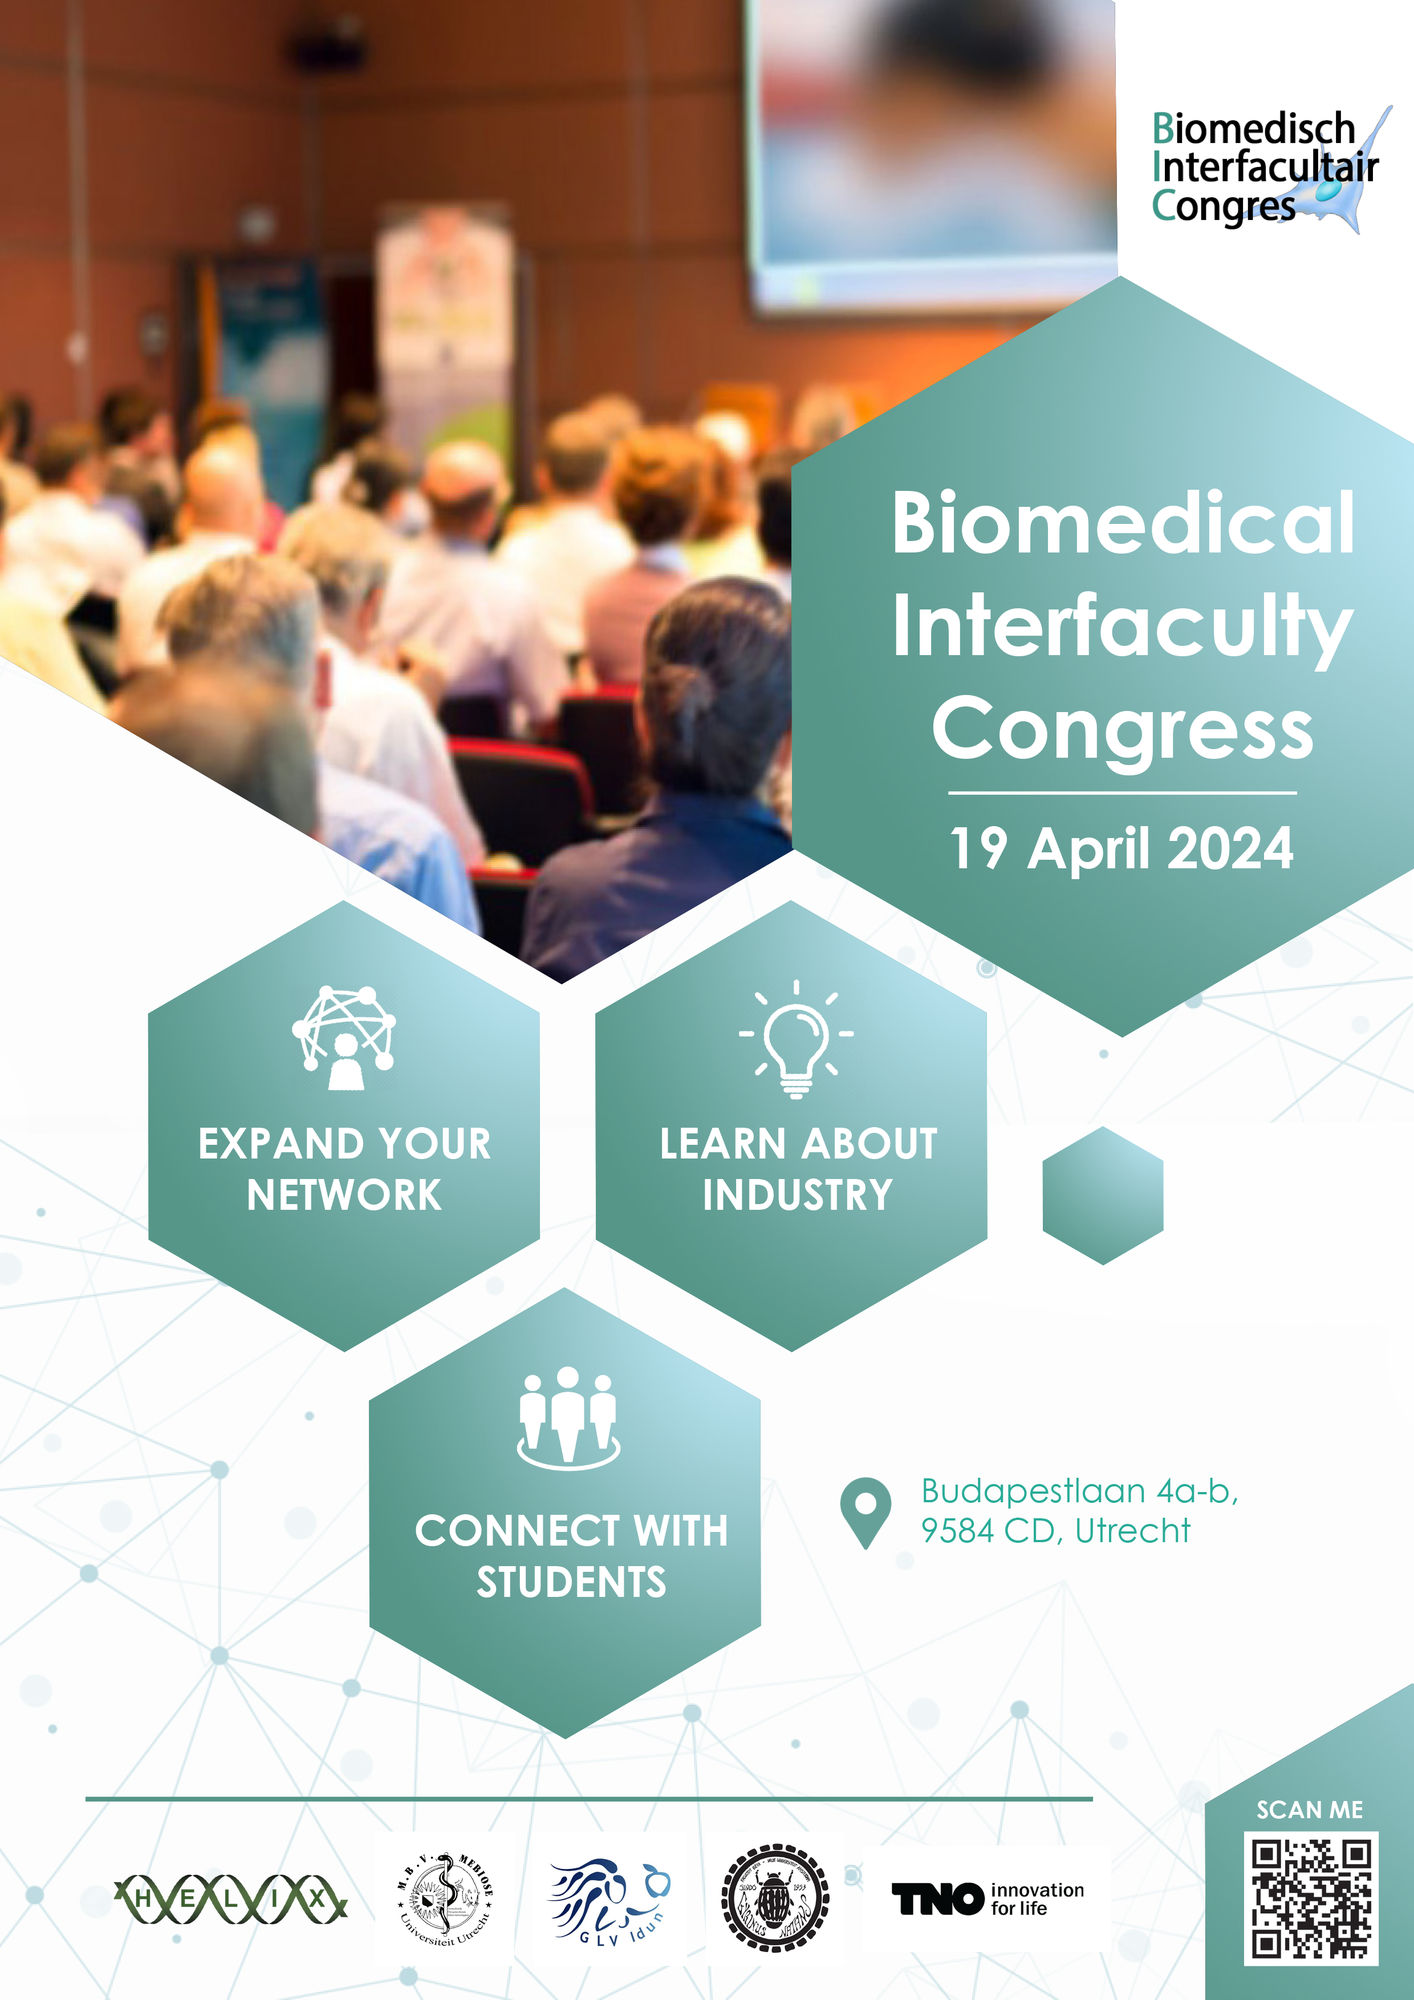 Biomedical Interfaculty Congress